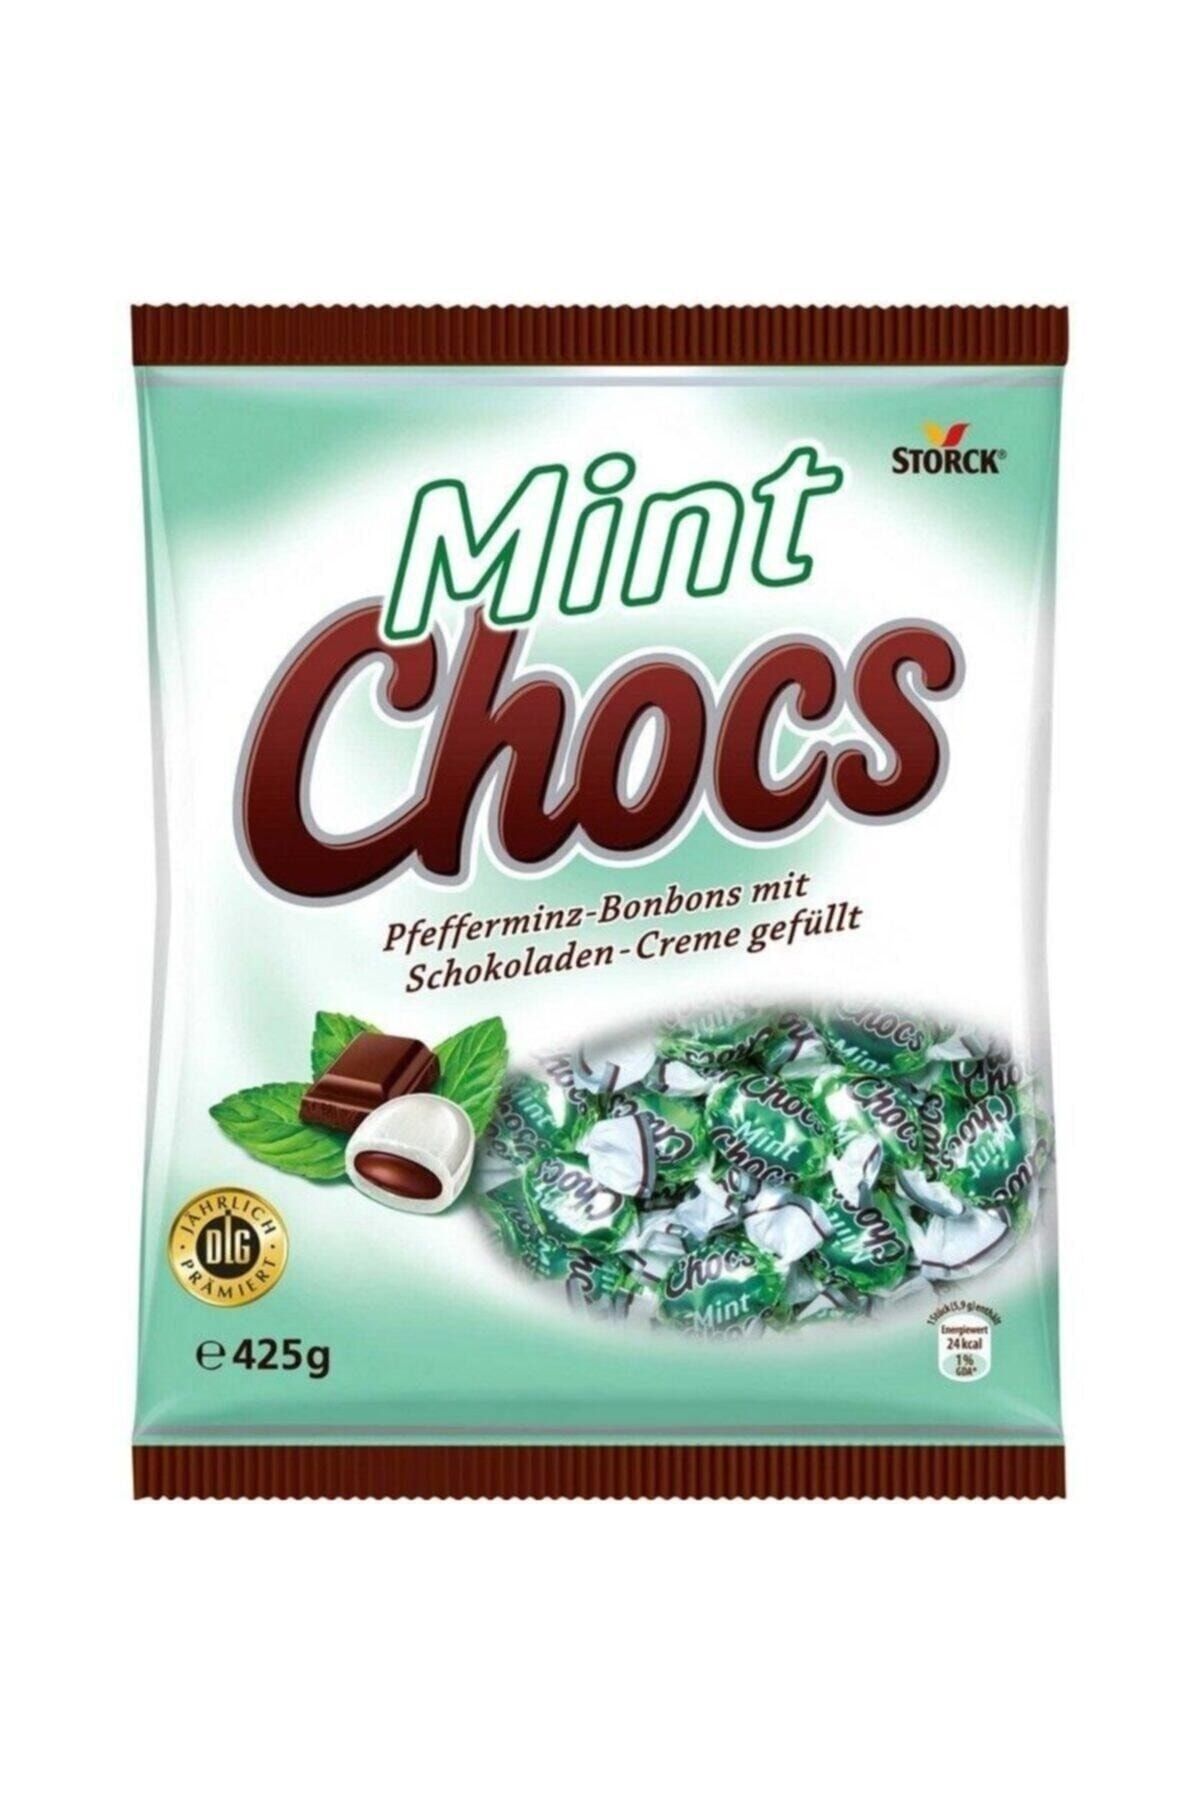 Coco Bonbon Storck Mint Chocs Çikolata Kremalı Nane Şekeri 425g